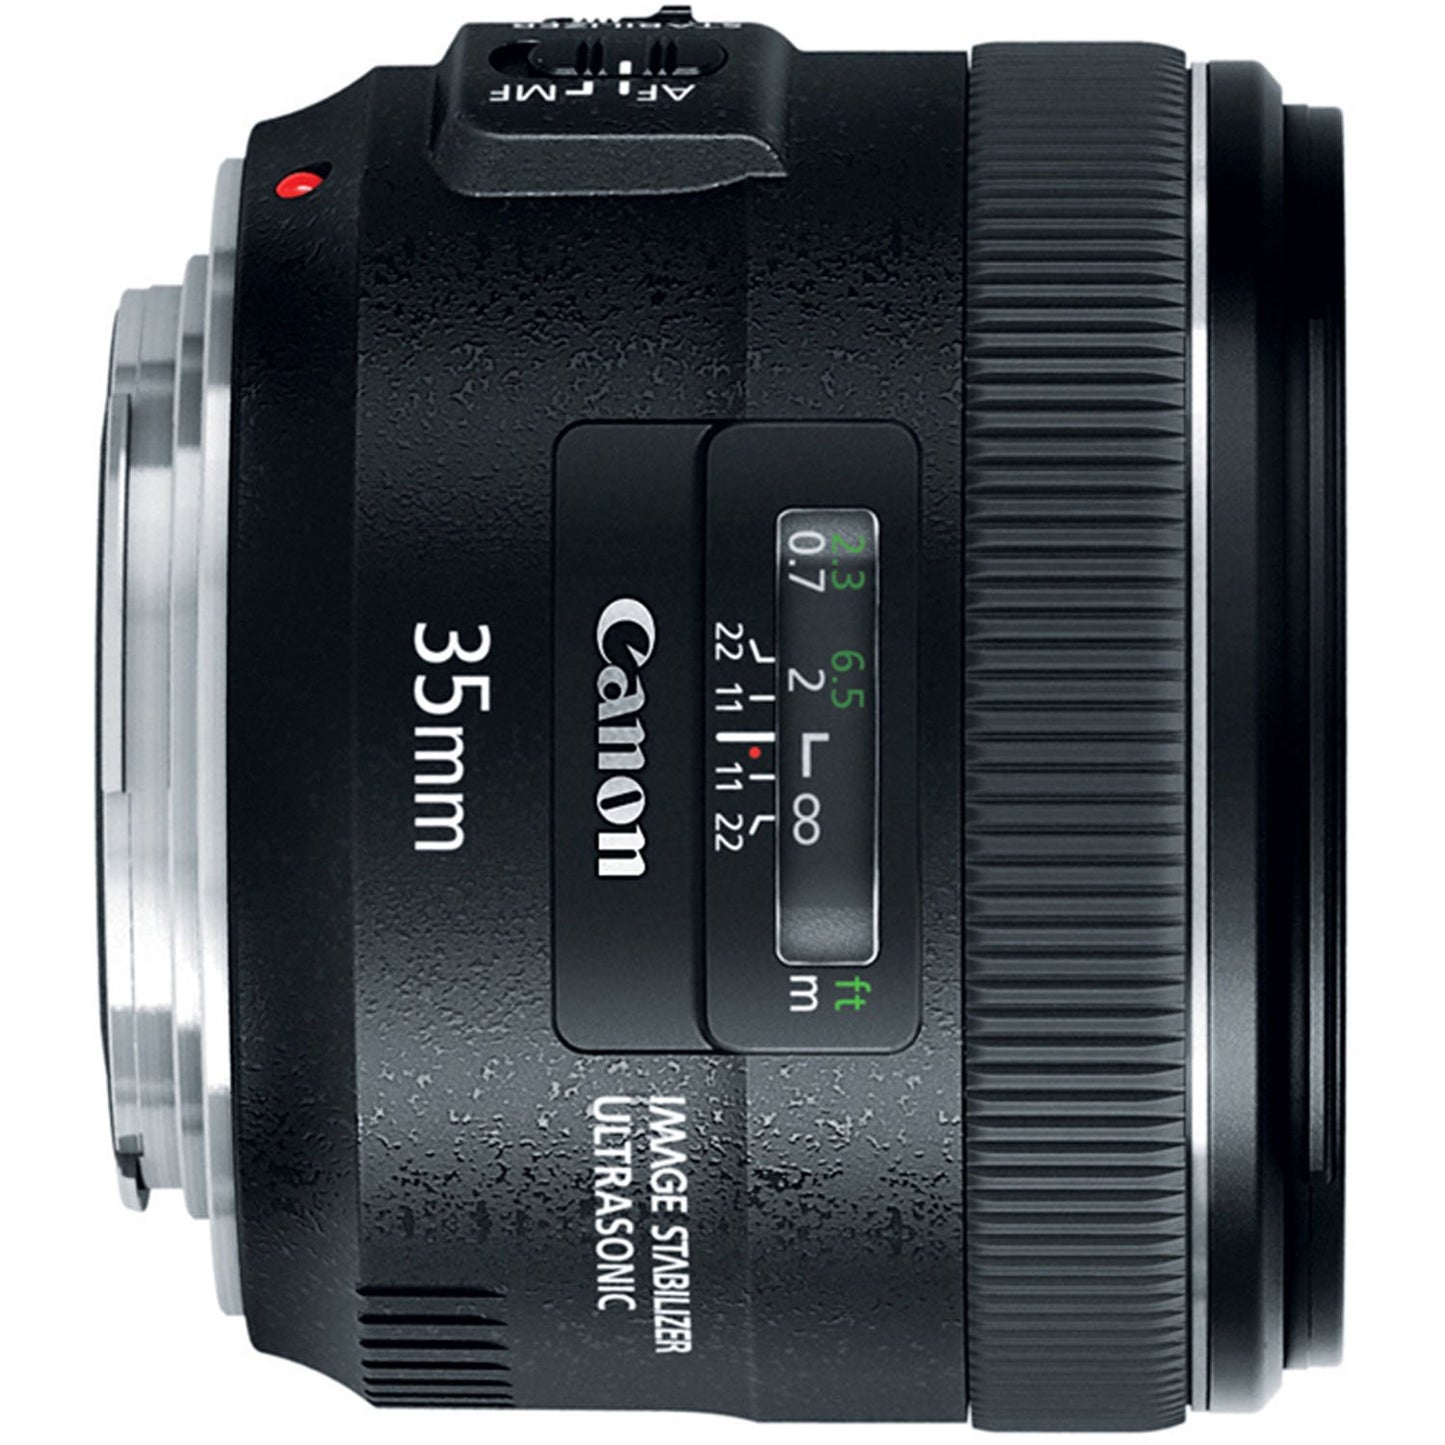 Canon EF 35mm f2 IS USM Lens